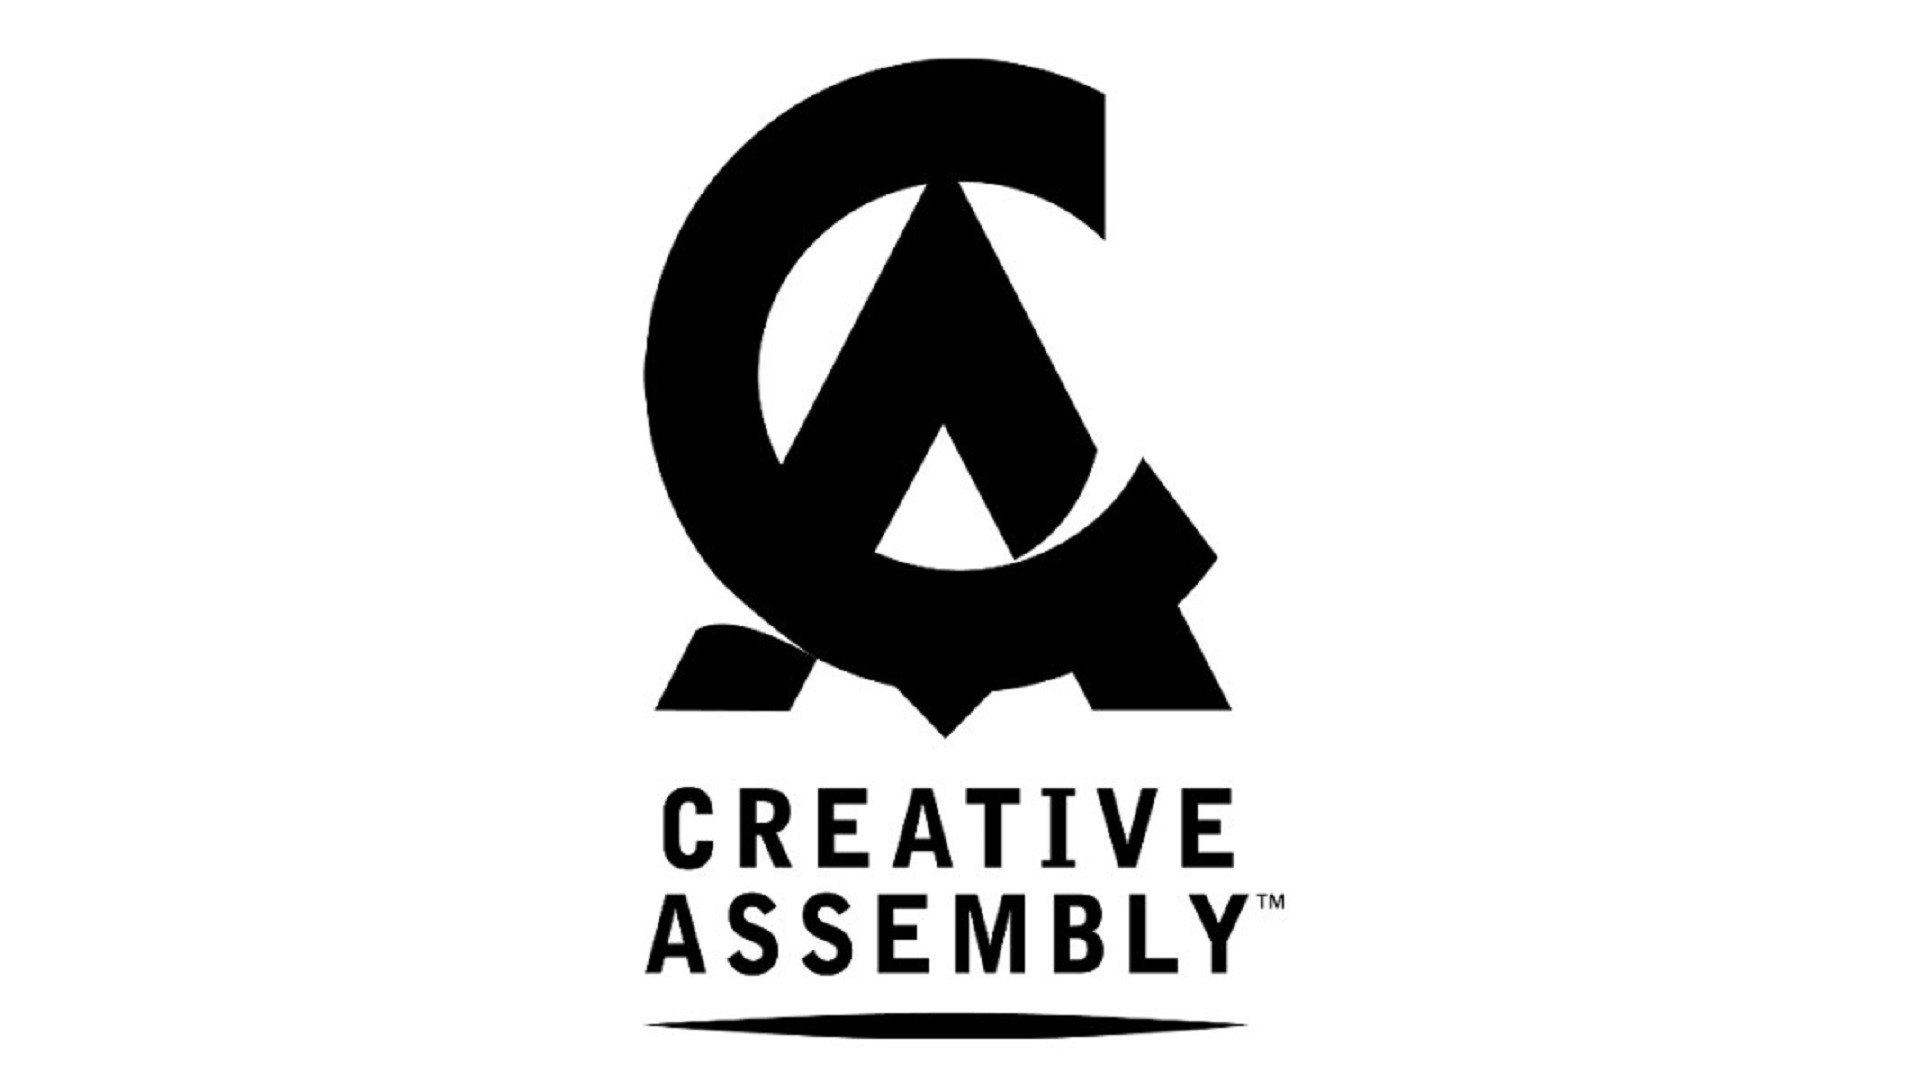 Creative Assembly يفتتح فرعه الثالث